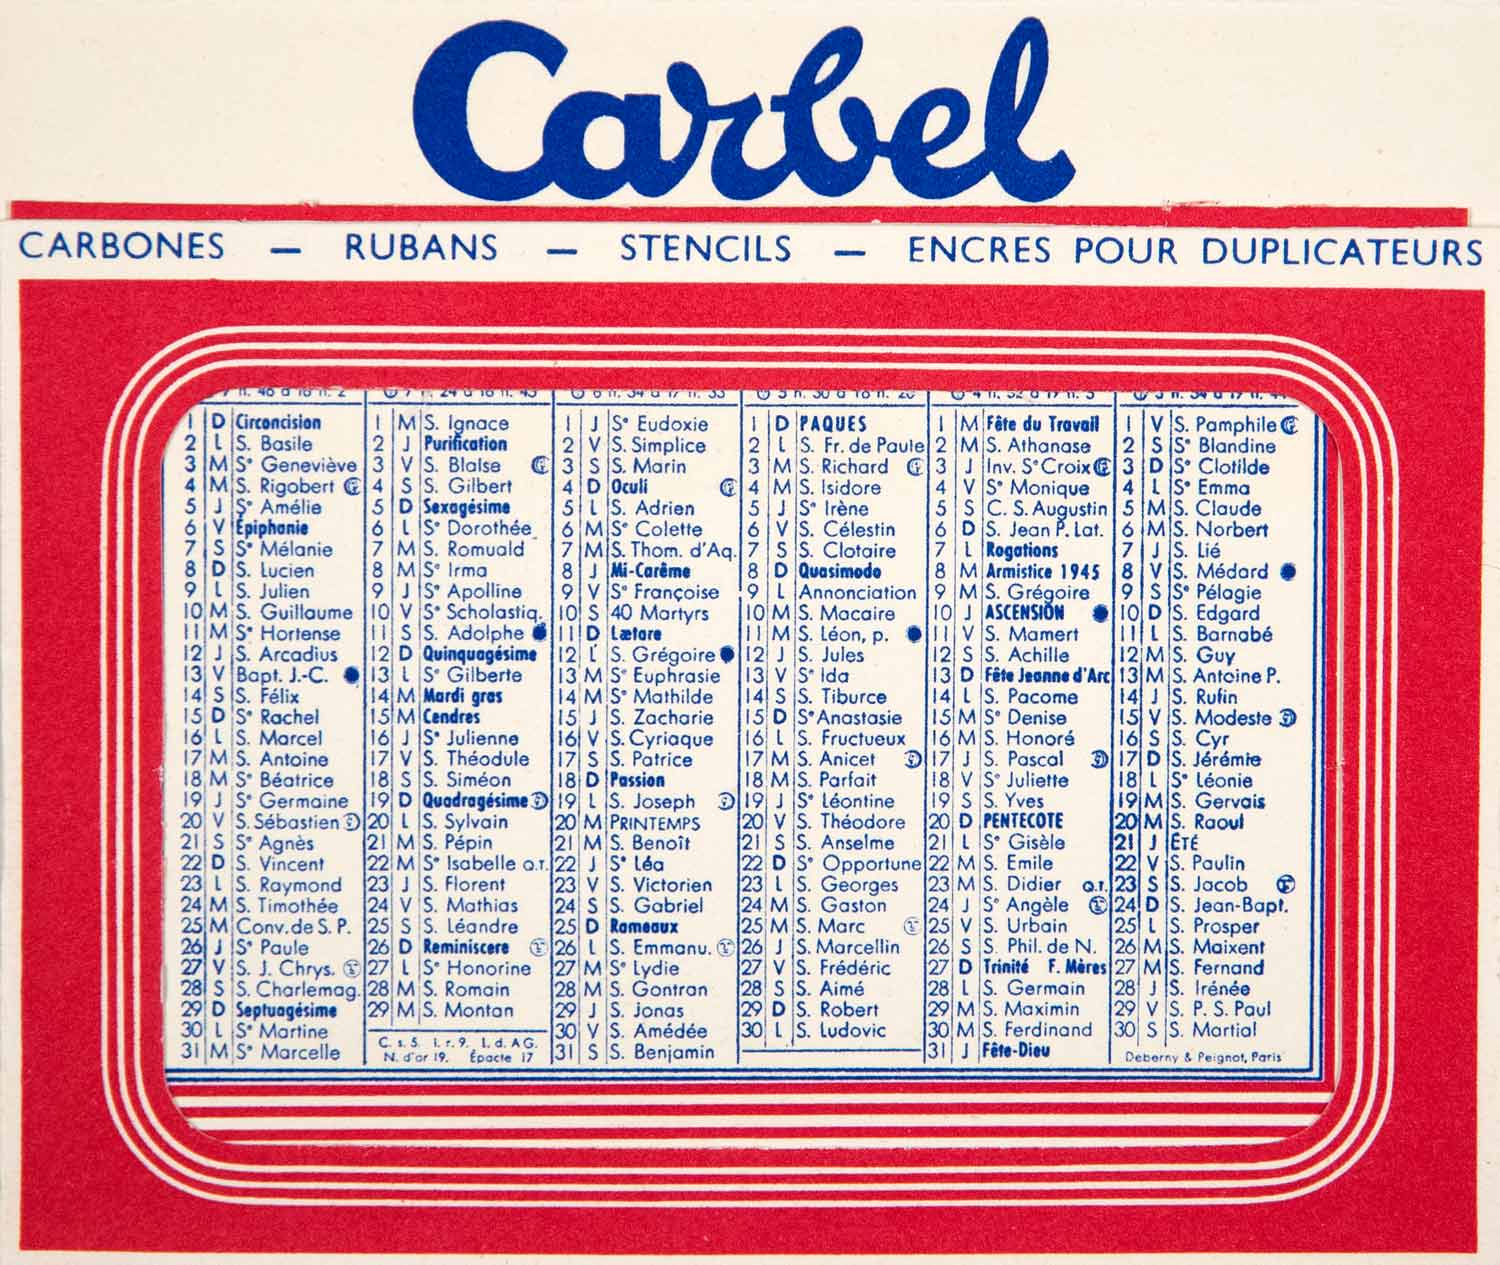 1956 Calendar Prints Carbel 8 Rue Maillard Paris Advertising French Ink VENA2